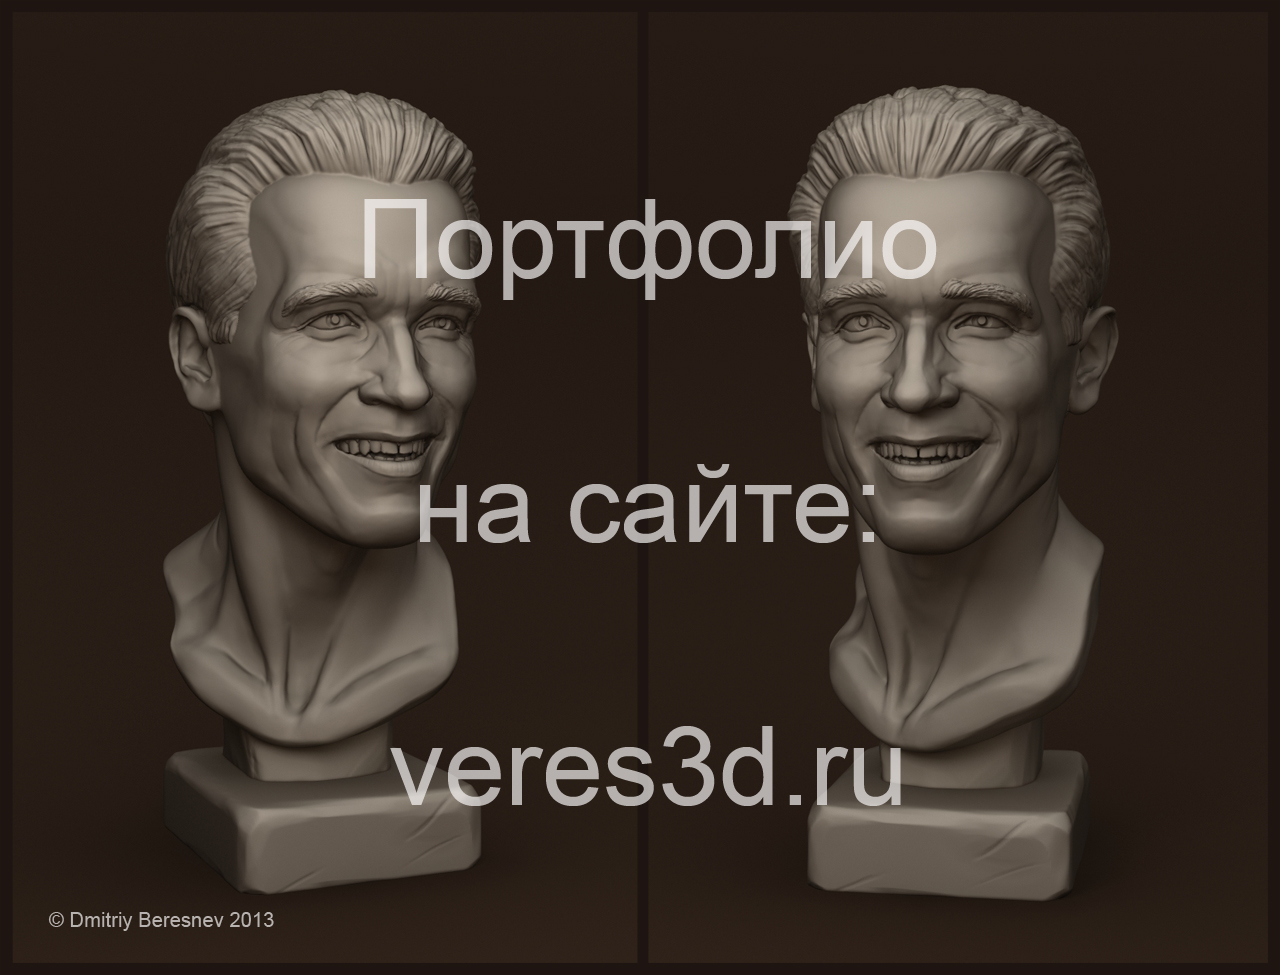 http://veres3d.ru/